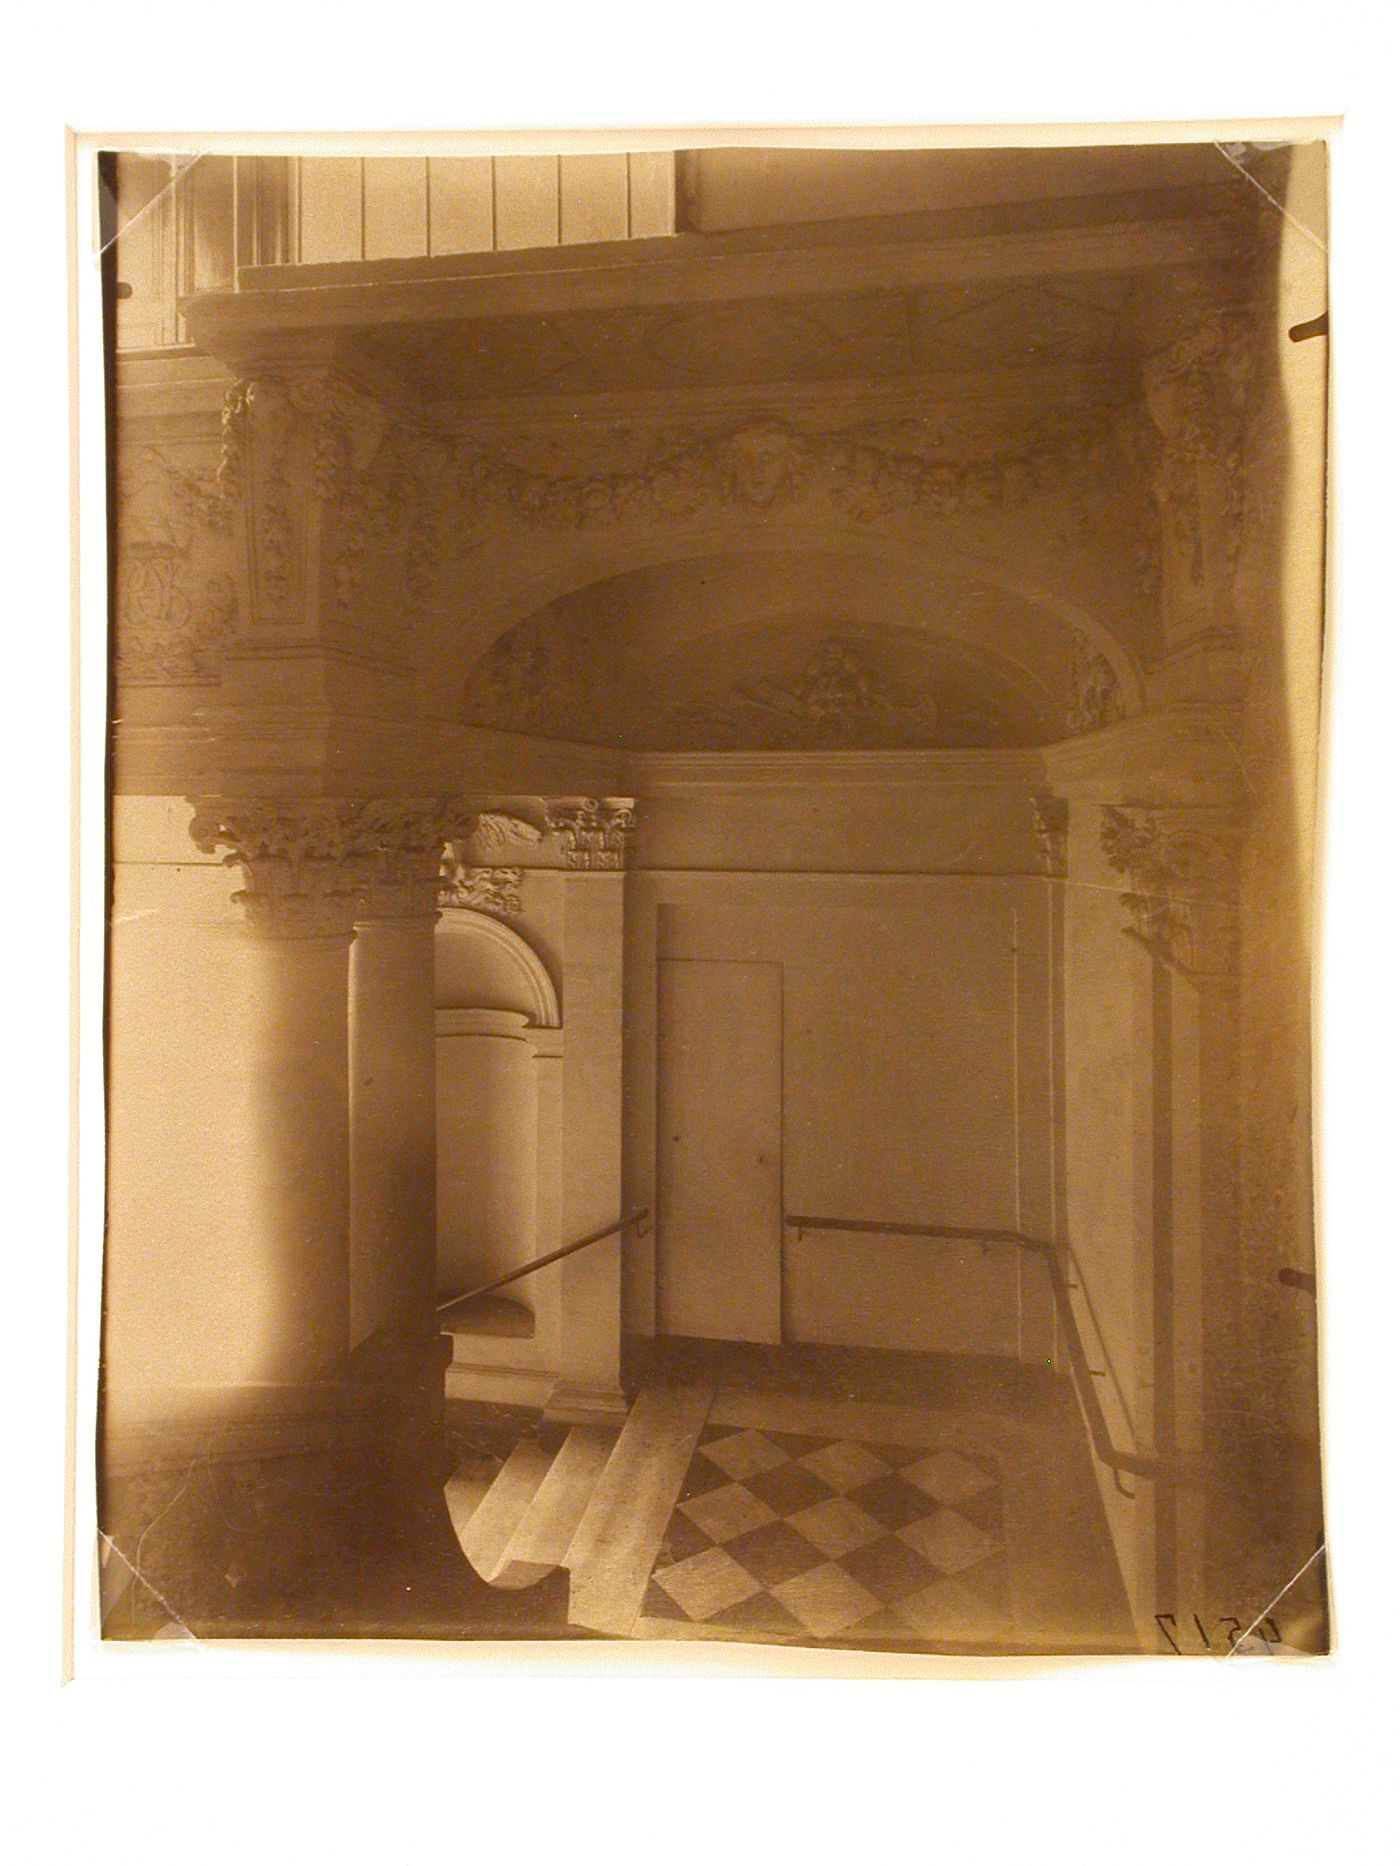 Hôtel de Beauvais: Interior view showing staircase landing and sculptural details on archway above, Paris, France